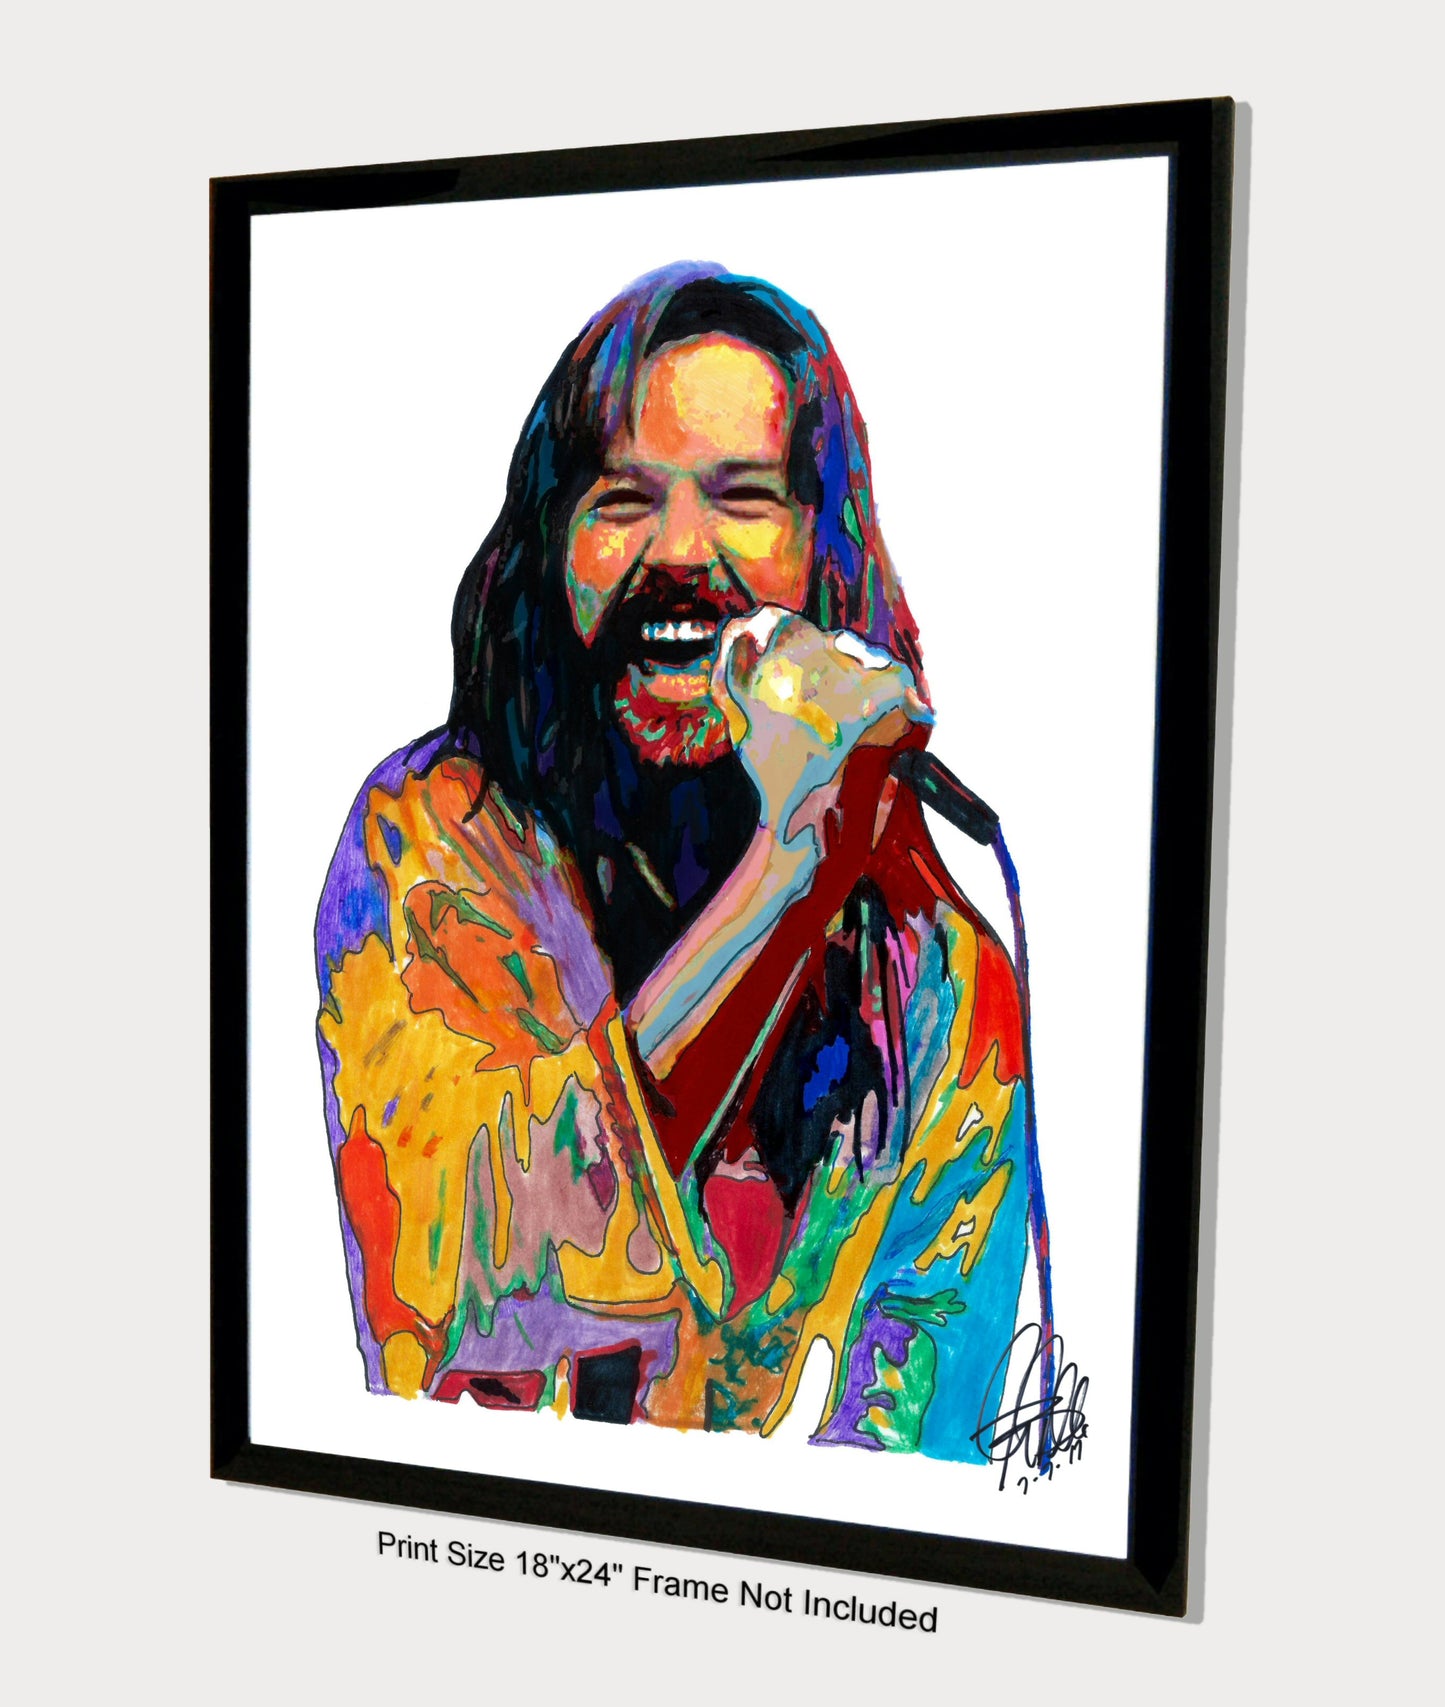 Bob Seger Silver Bullet Band Singer Rock Music Poster Print Wall Art 18x24